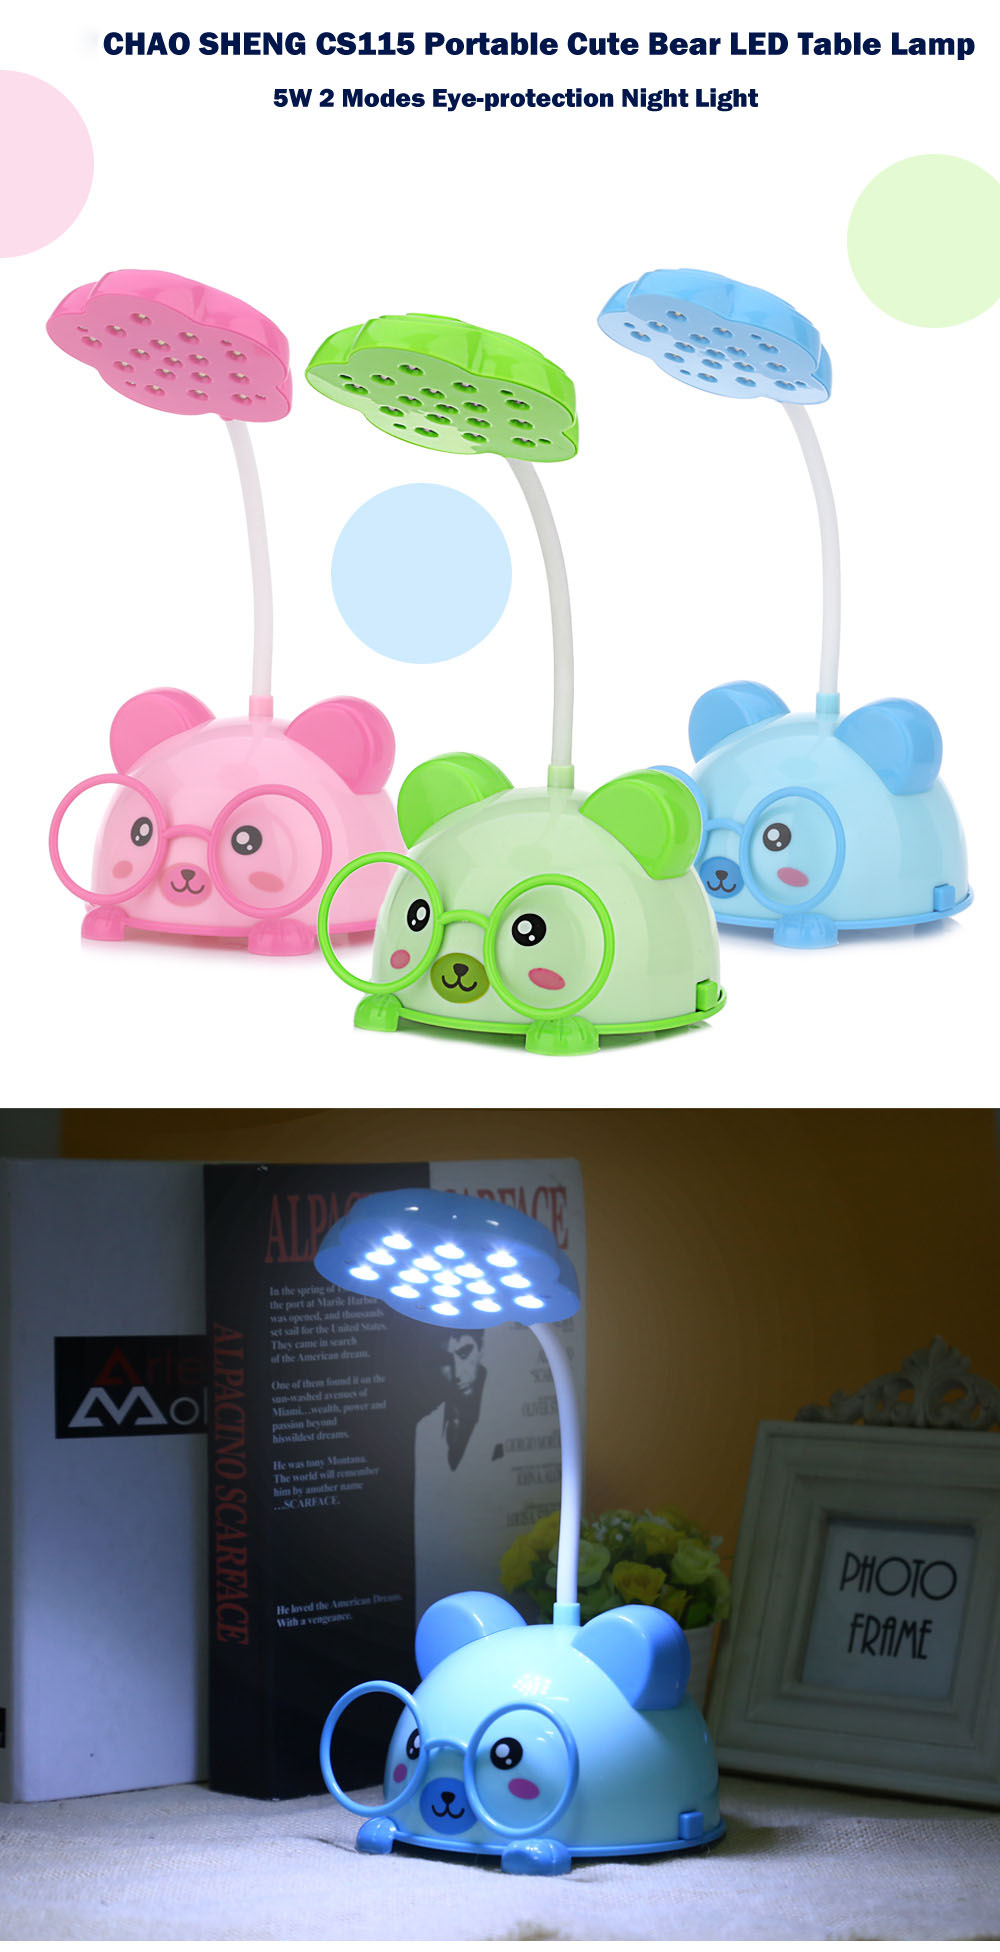 CHAO SHENG CS115 Portable Lovely Bear Eye-protection 5W LED Table Lamp 2 Modes Night Light